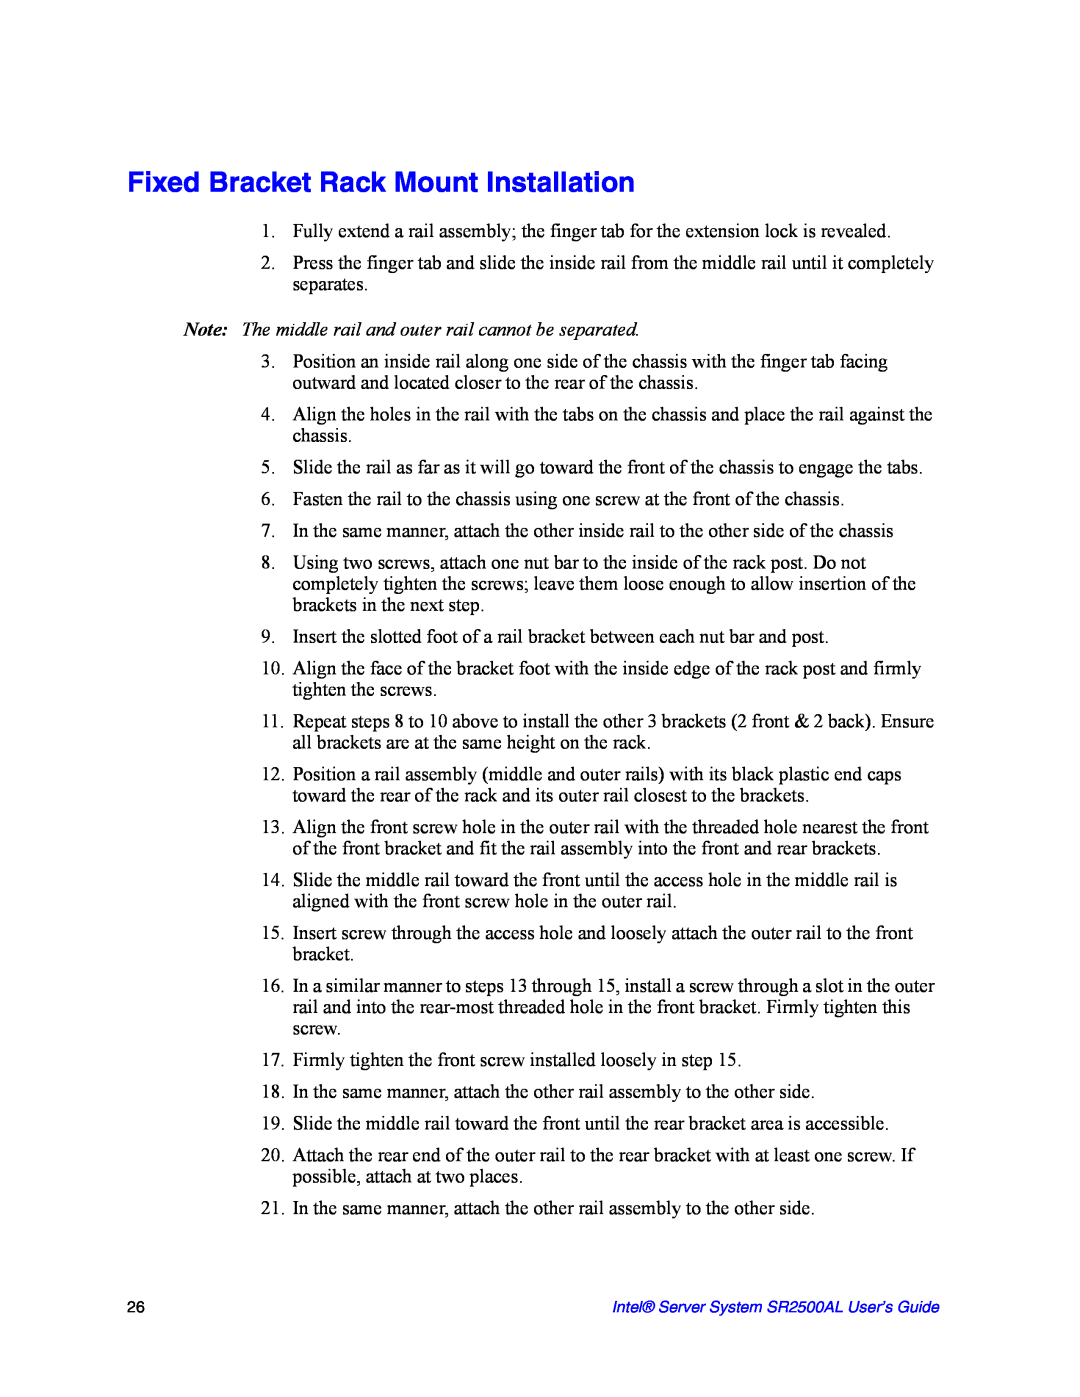 Intel SR2500AL manual Fixed Bracket Rack Mount Installation 